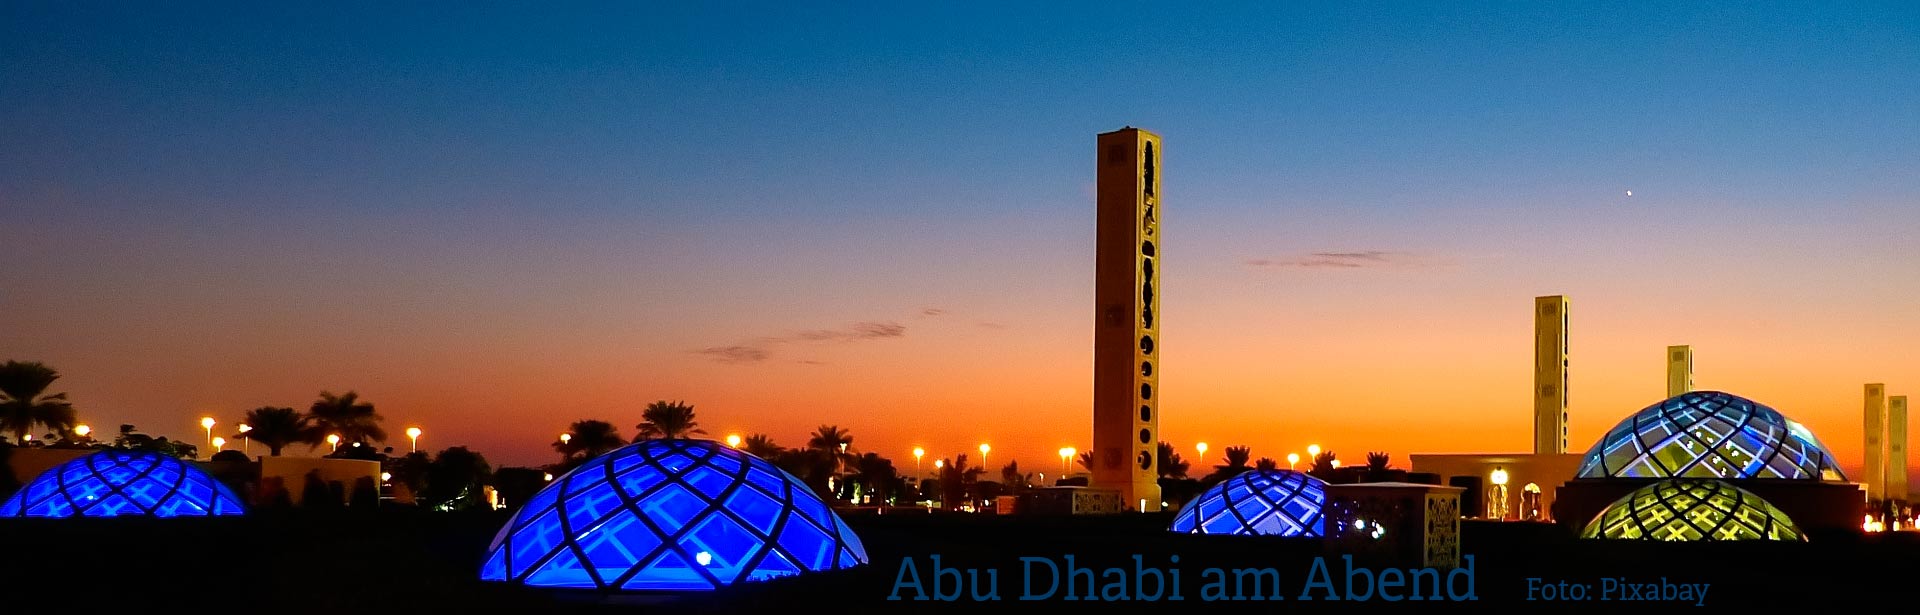 Abu Dhabi am Abend, Foto: Pixabay